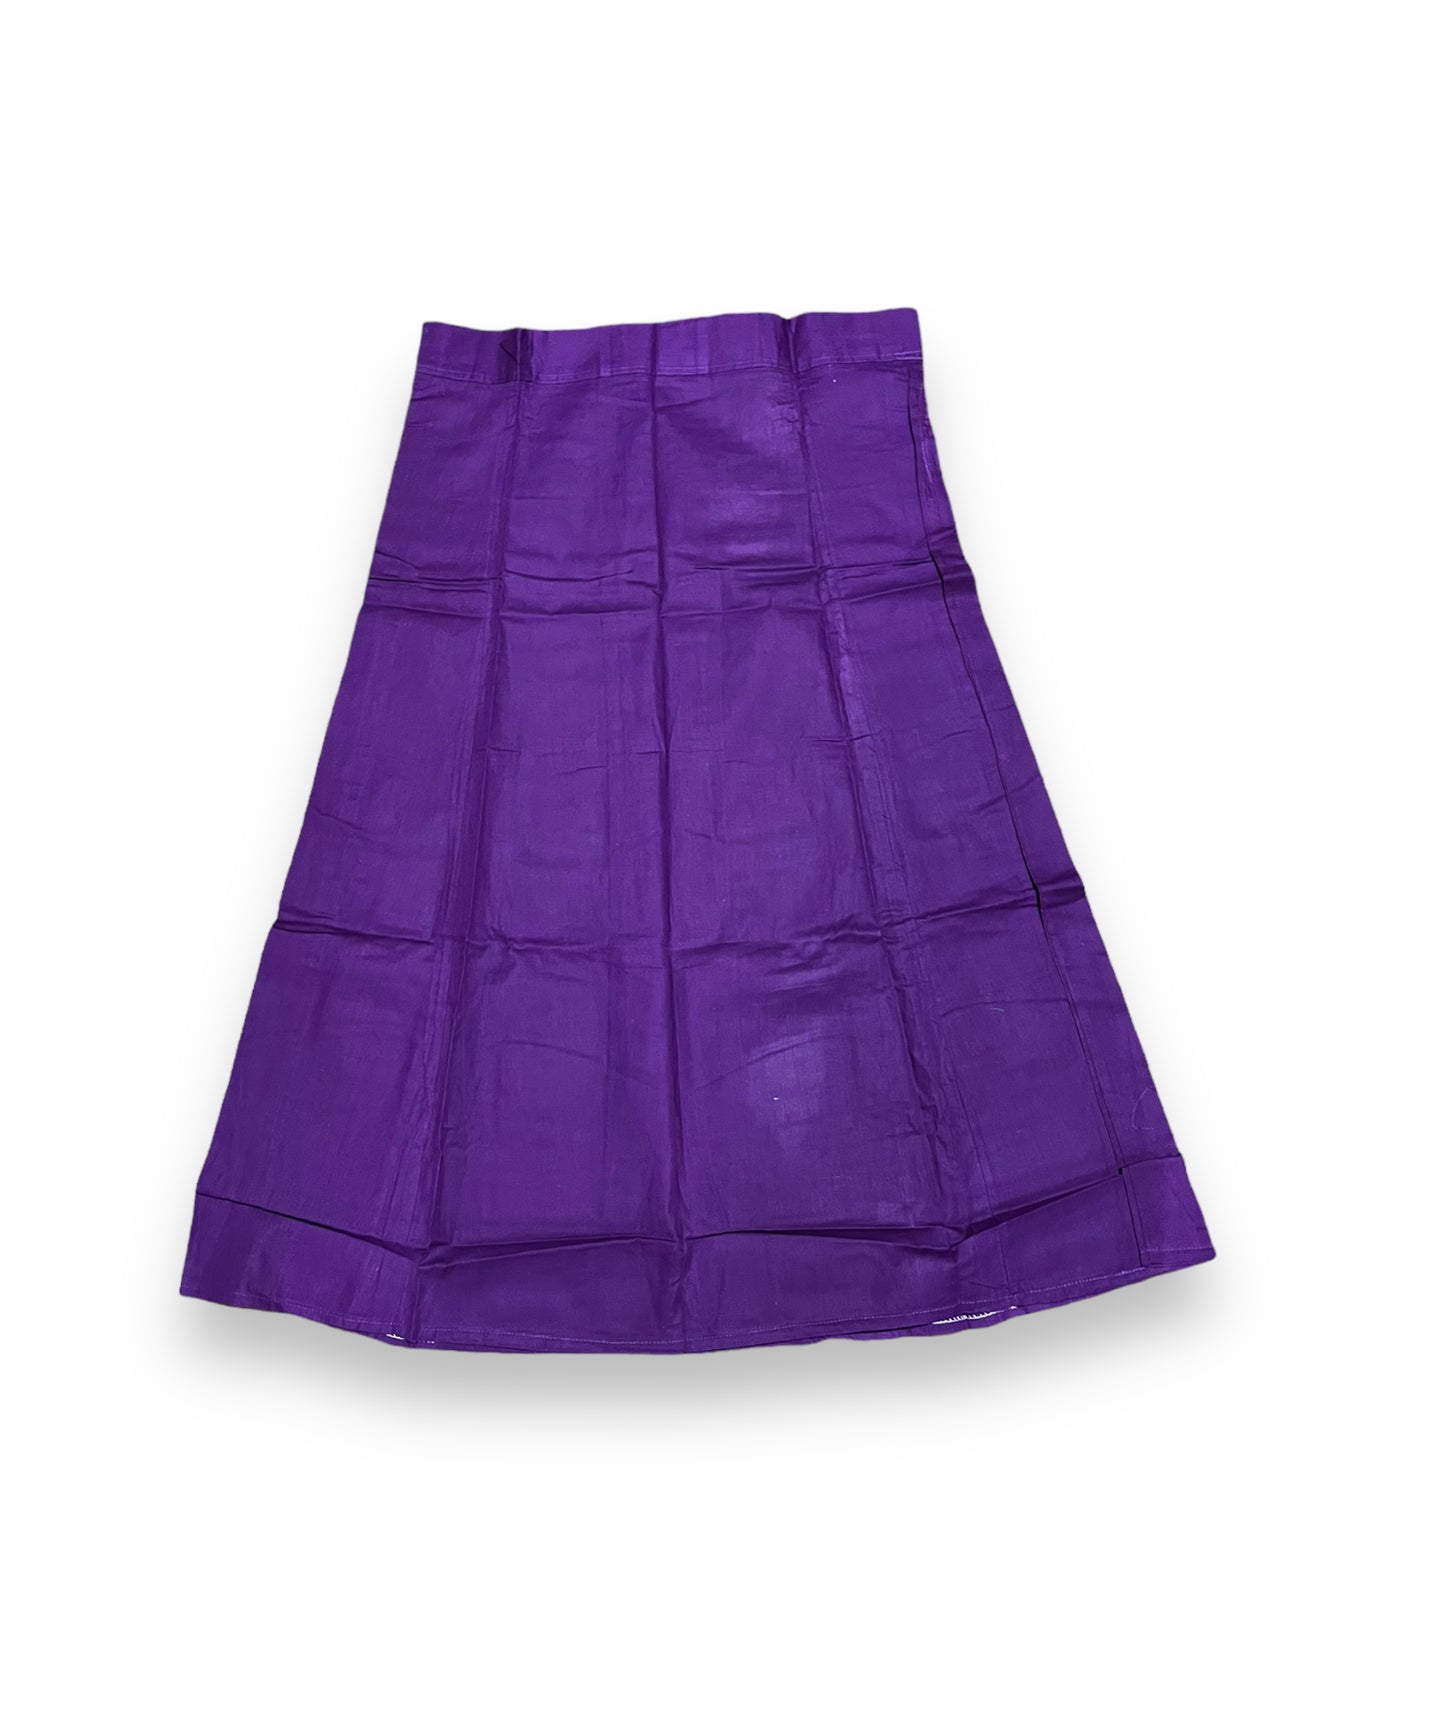 Essential Plain Cotton Petticoat for Women -08